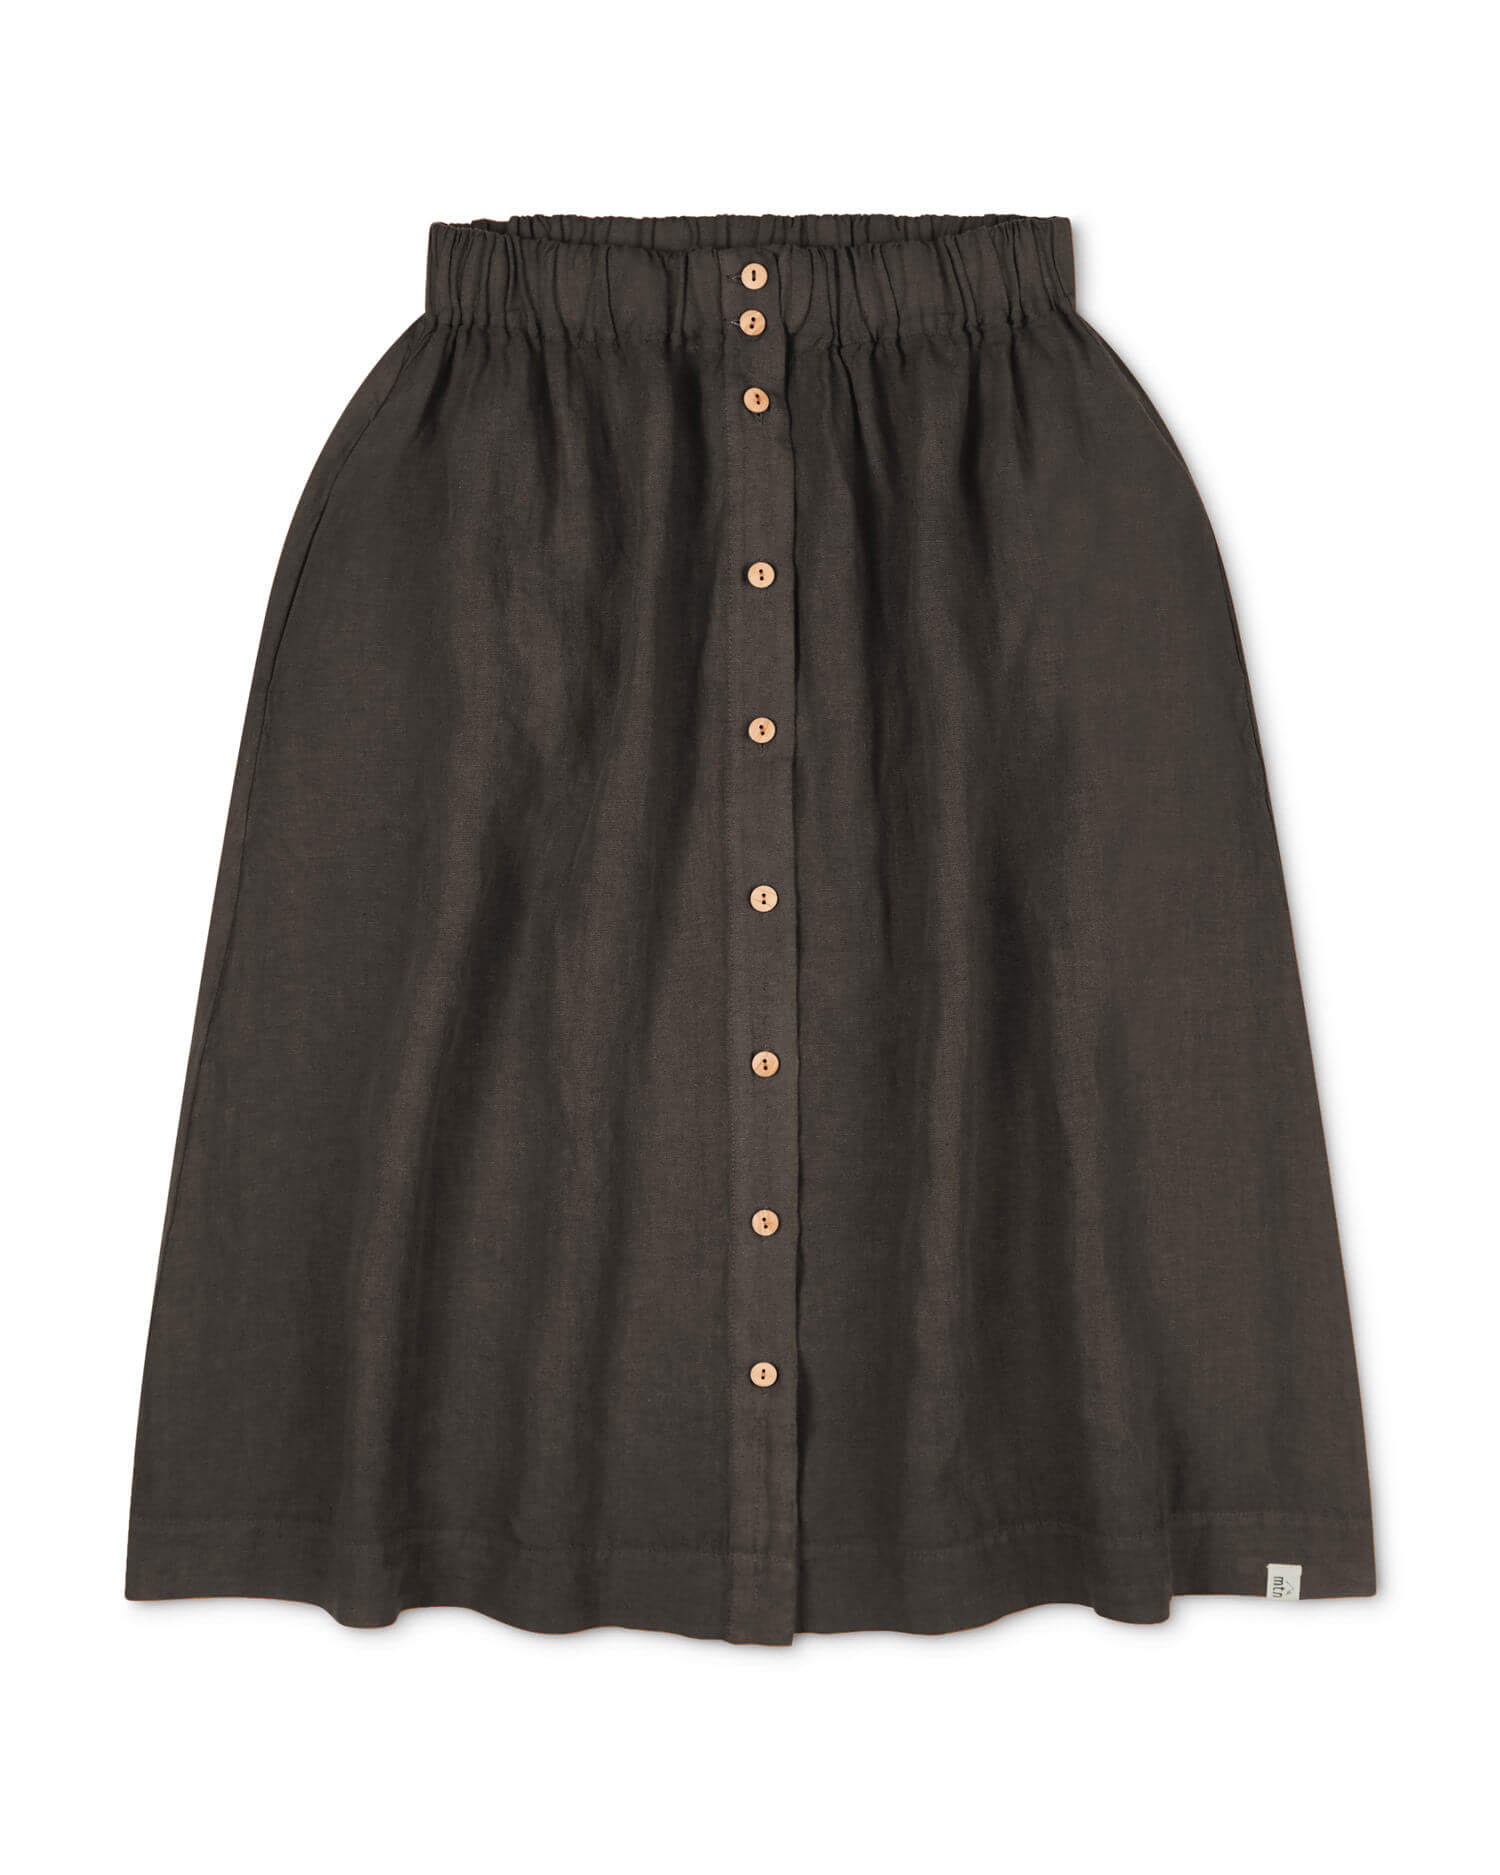 Black linen midi skirt from Matona